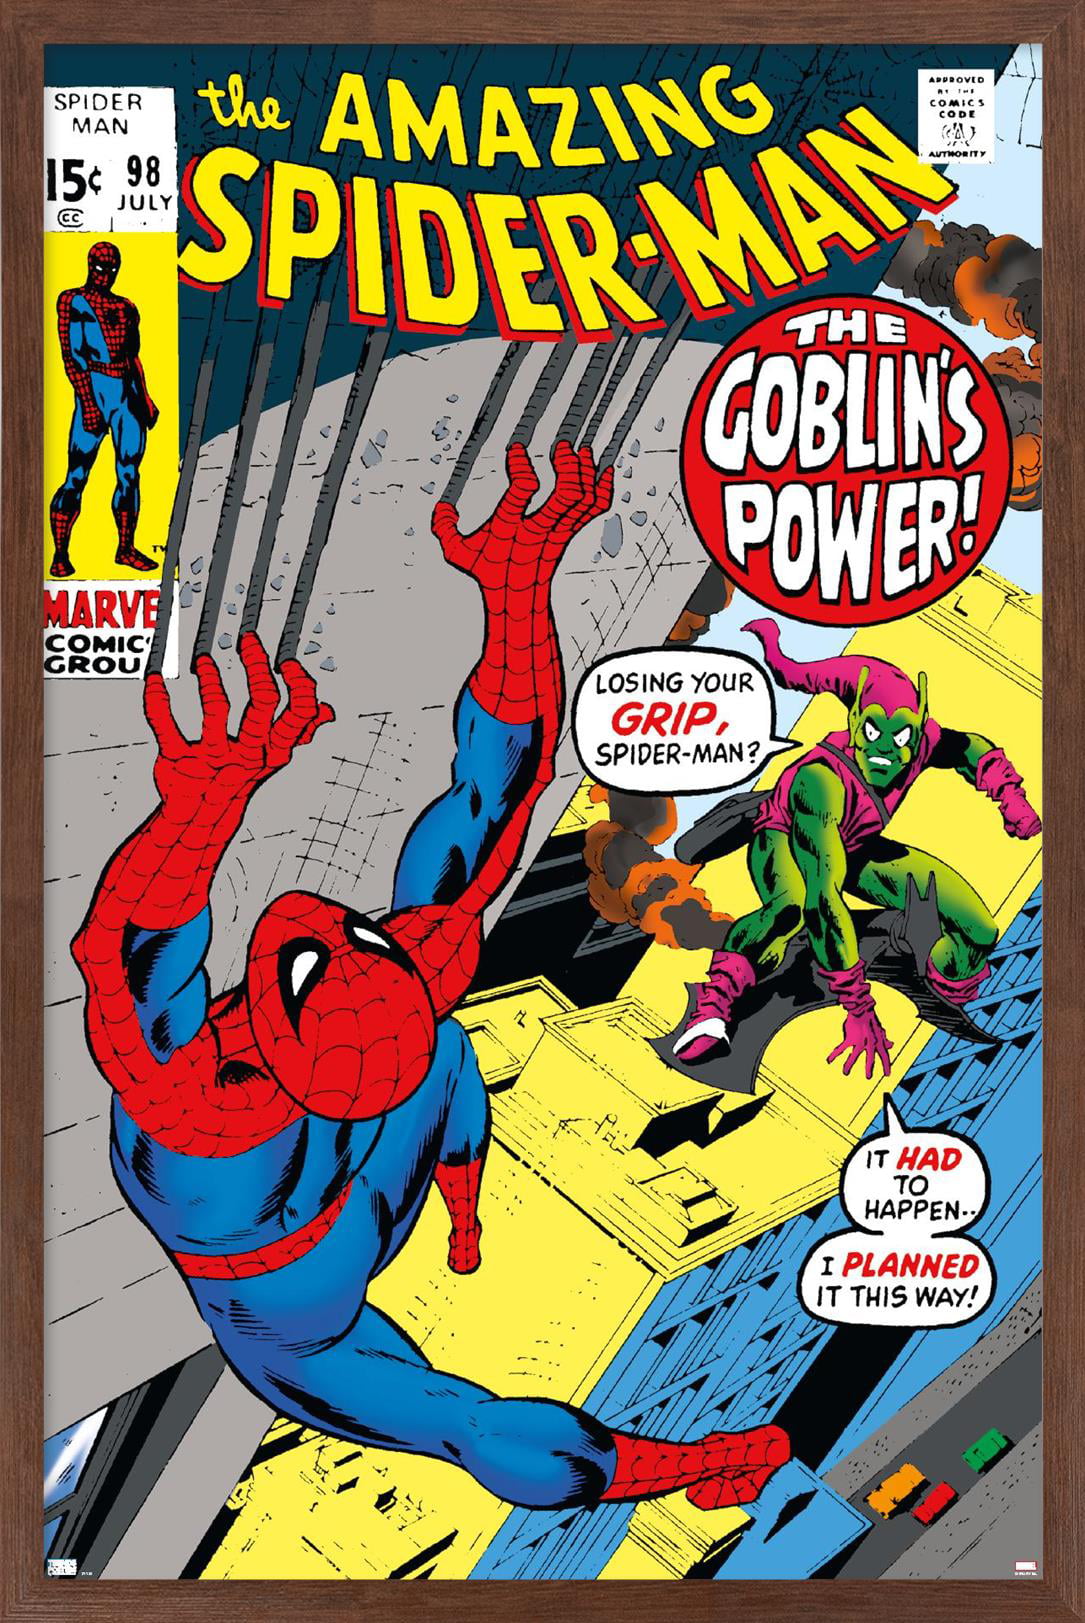 Amazing Spiderman #5 FRIDGE MAGNET comic book 